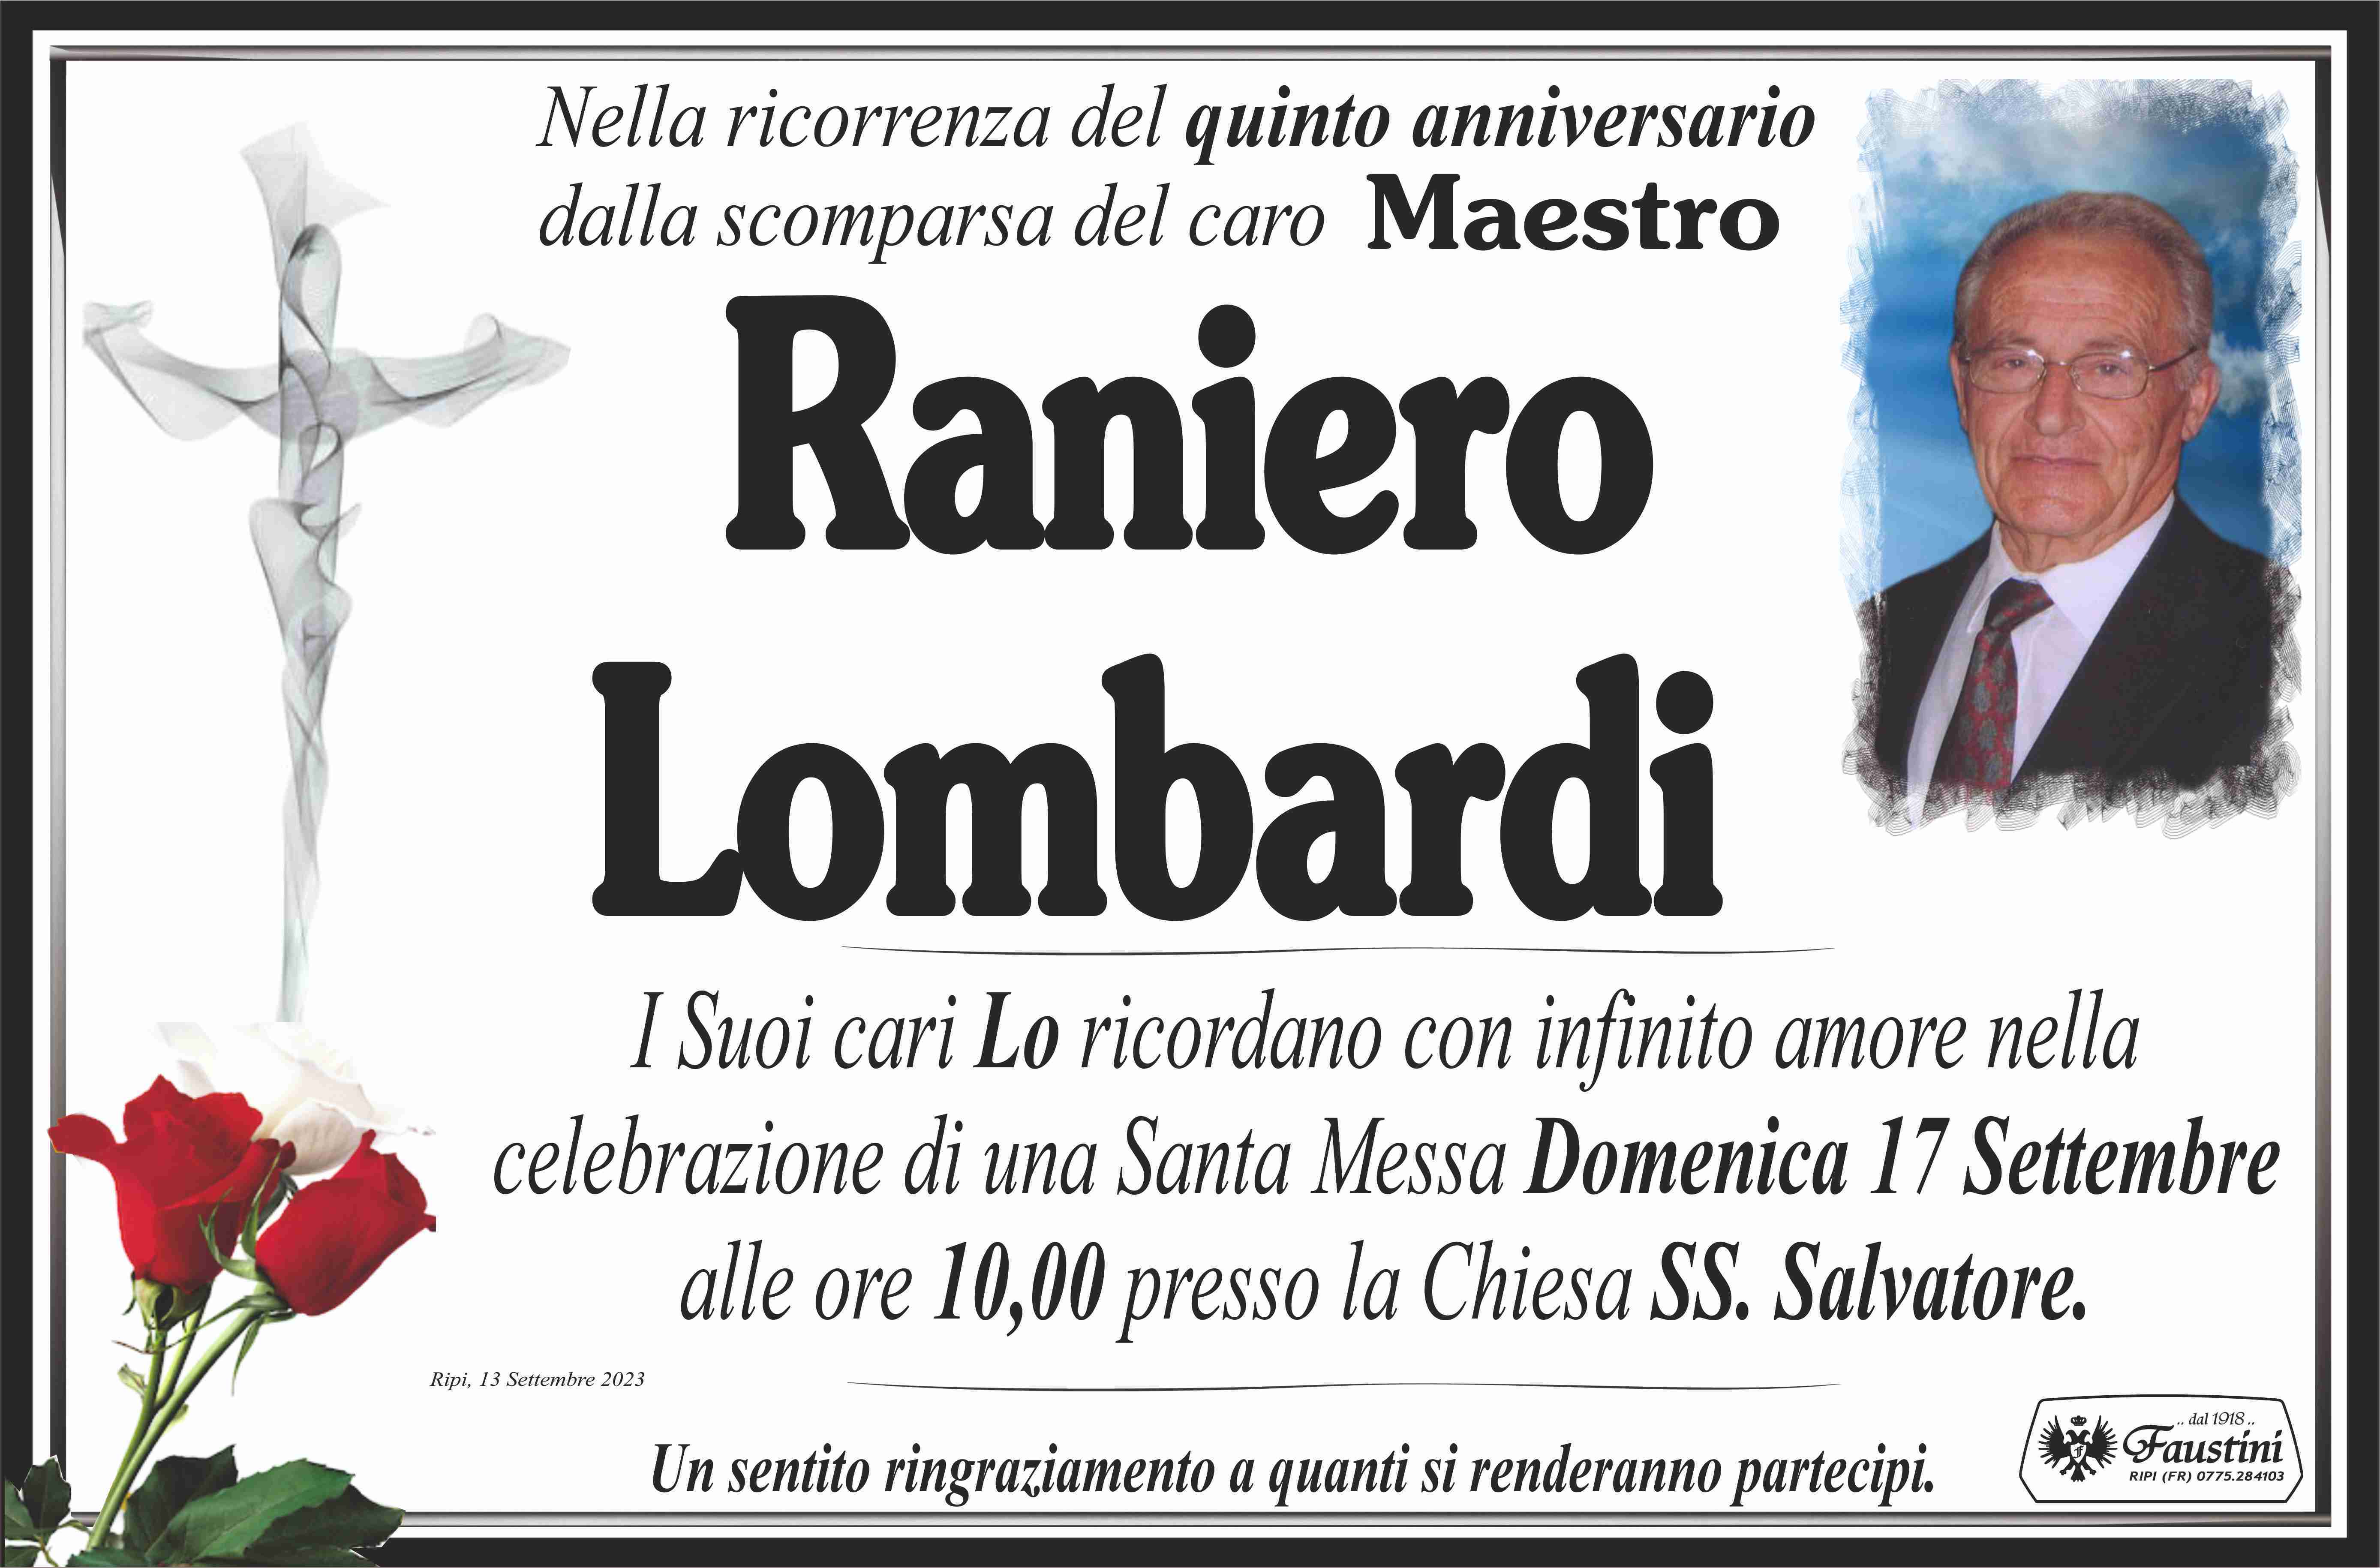 Raniero Lombardi